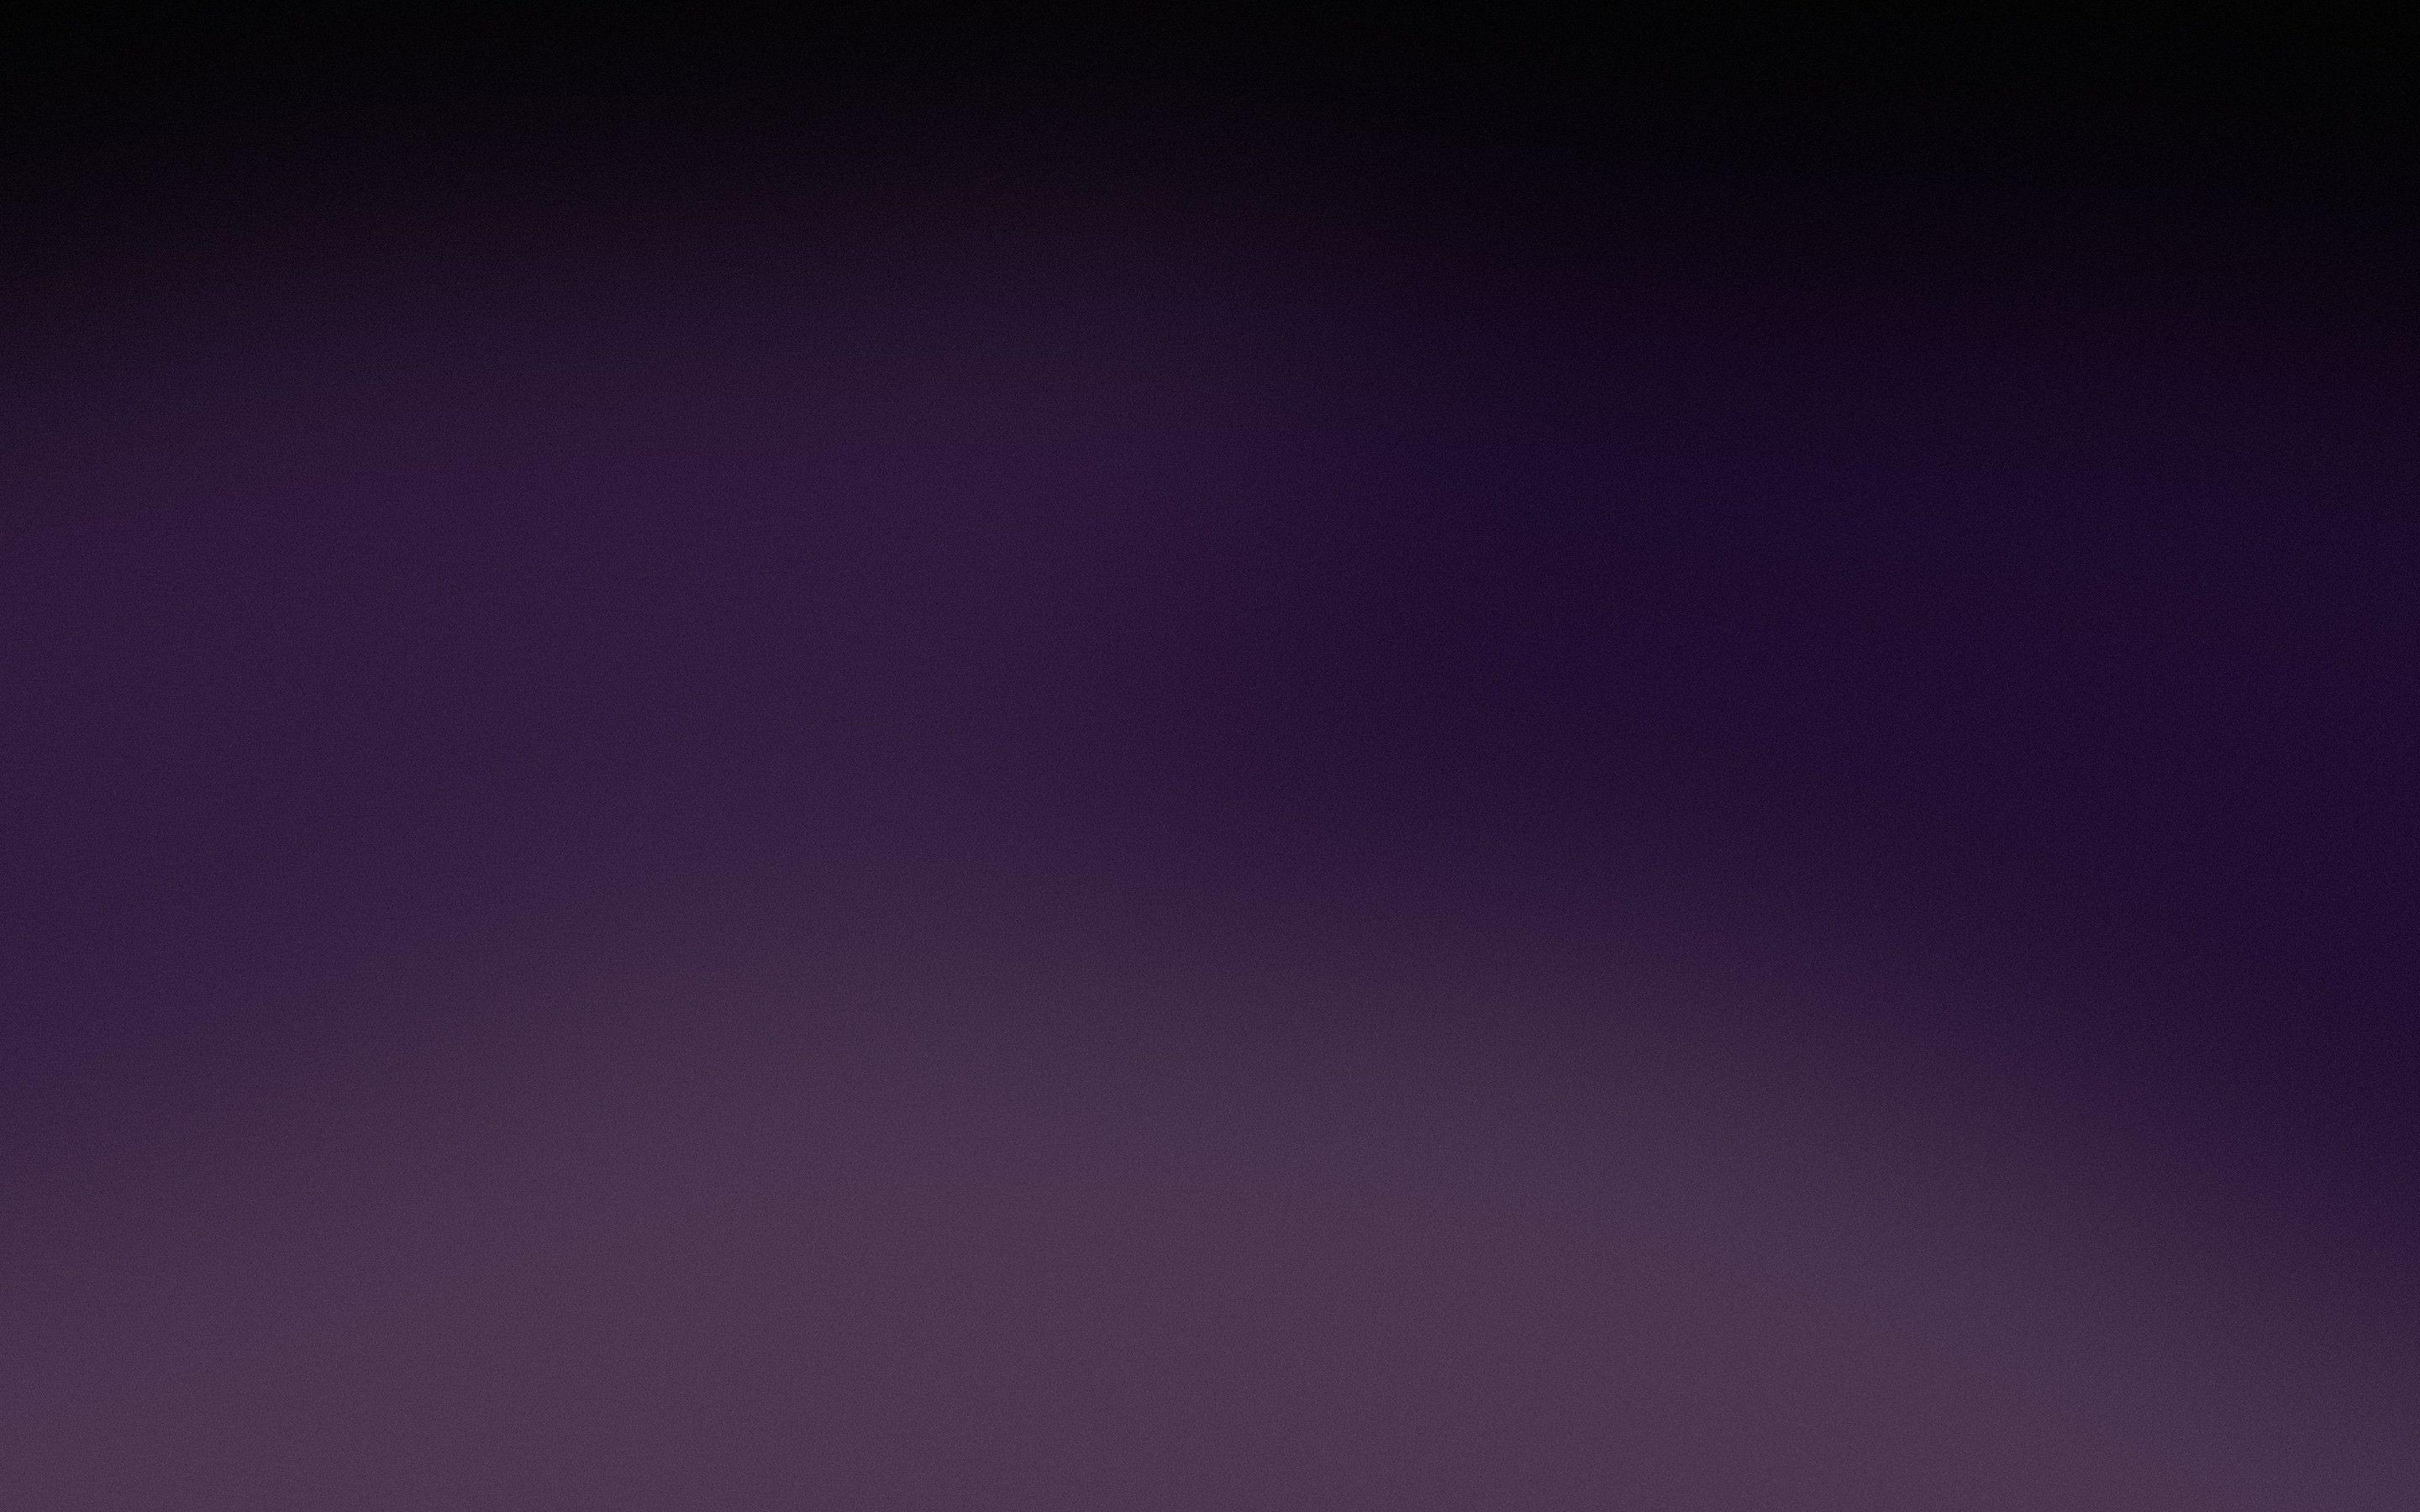 Spendid Purple Background for Free Download. Free & Premium